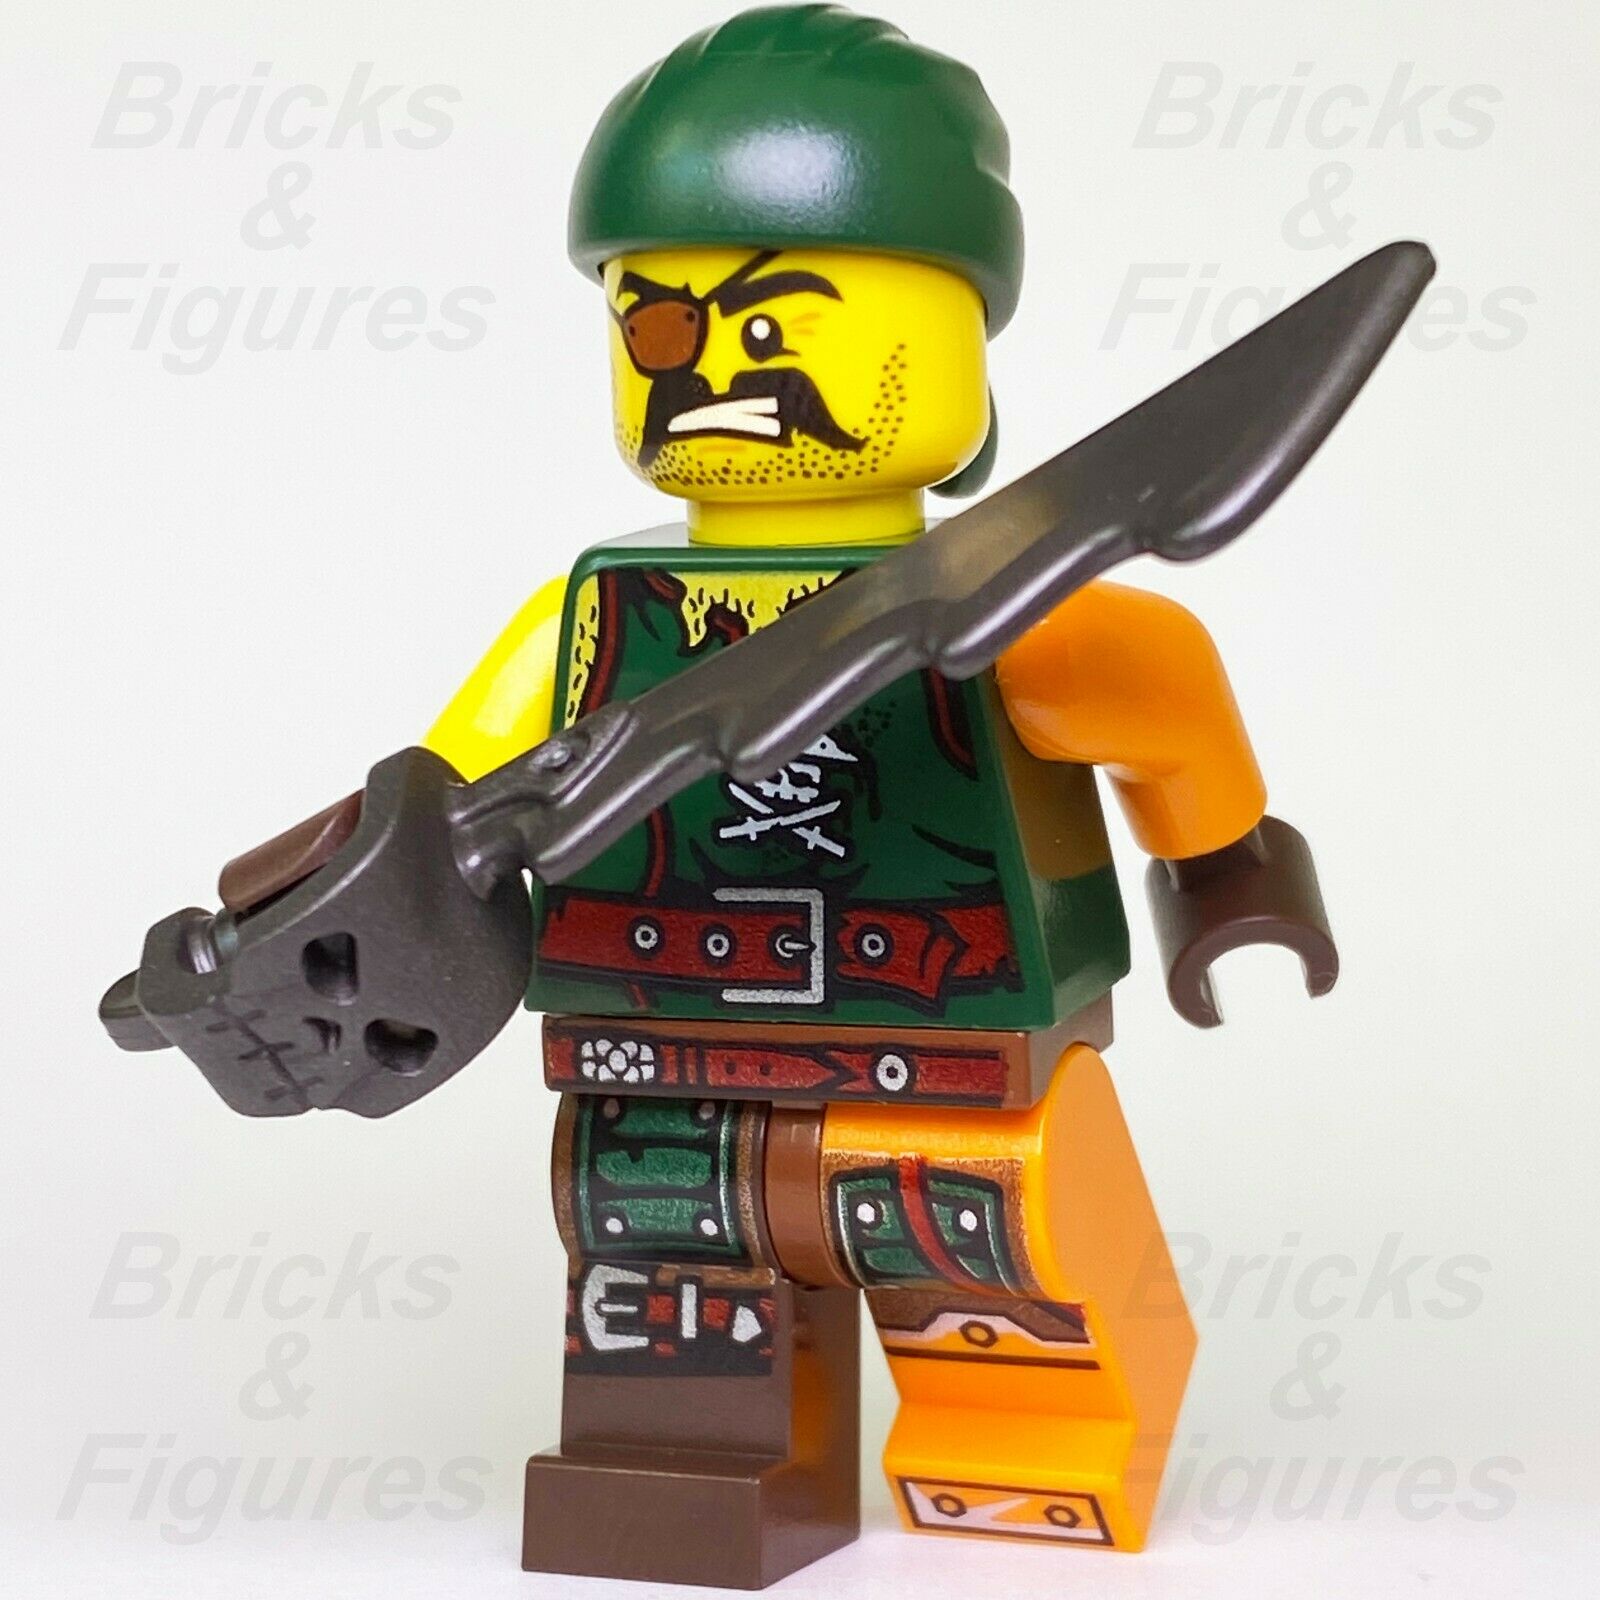 New Ninjago LEGO Sqiffy Pirate with Sword Skybound Minifigure 70604 70594 - Bricks & Figures